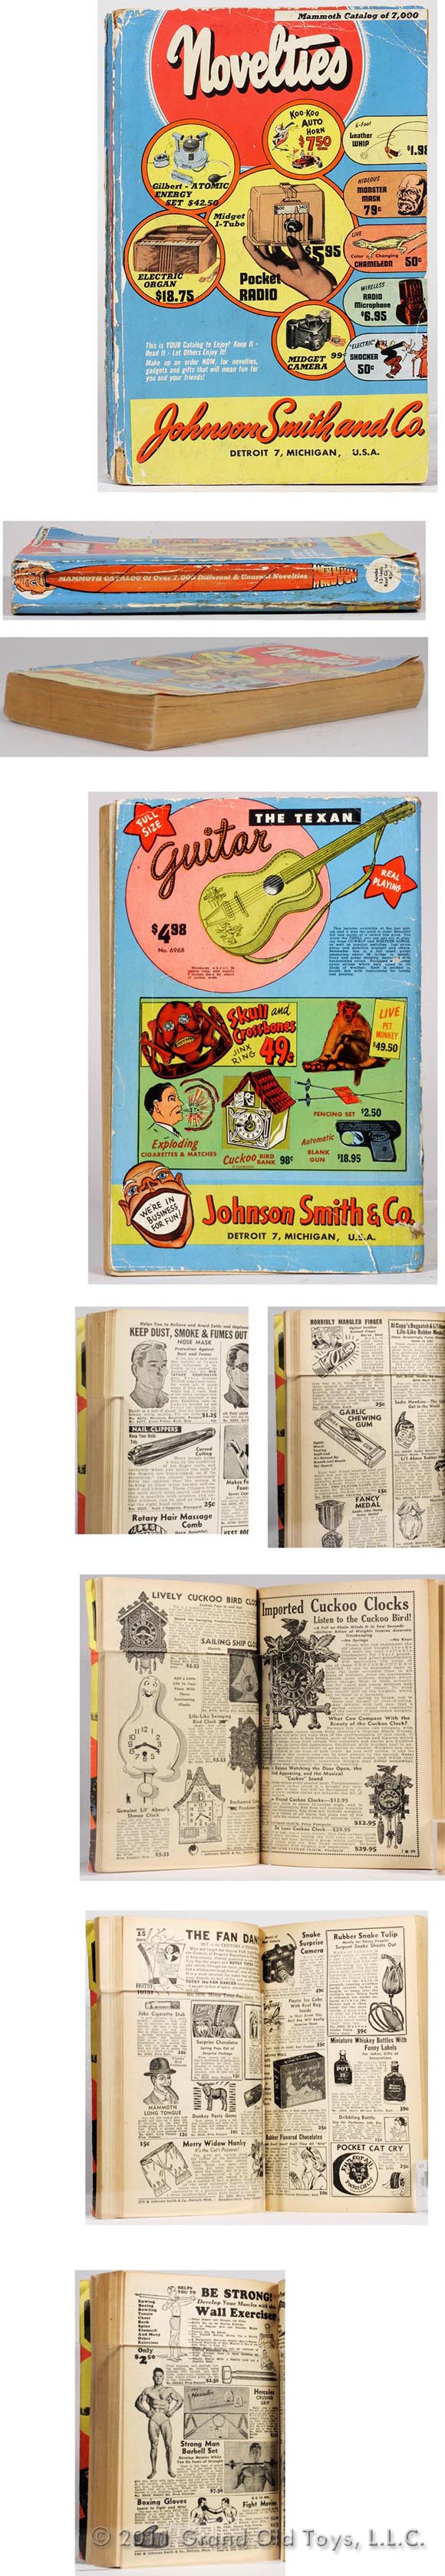 1951 Johnson Smith Co Original 580 Pg. Catalog